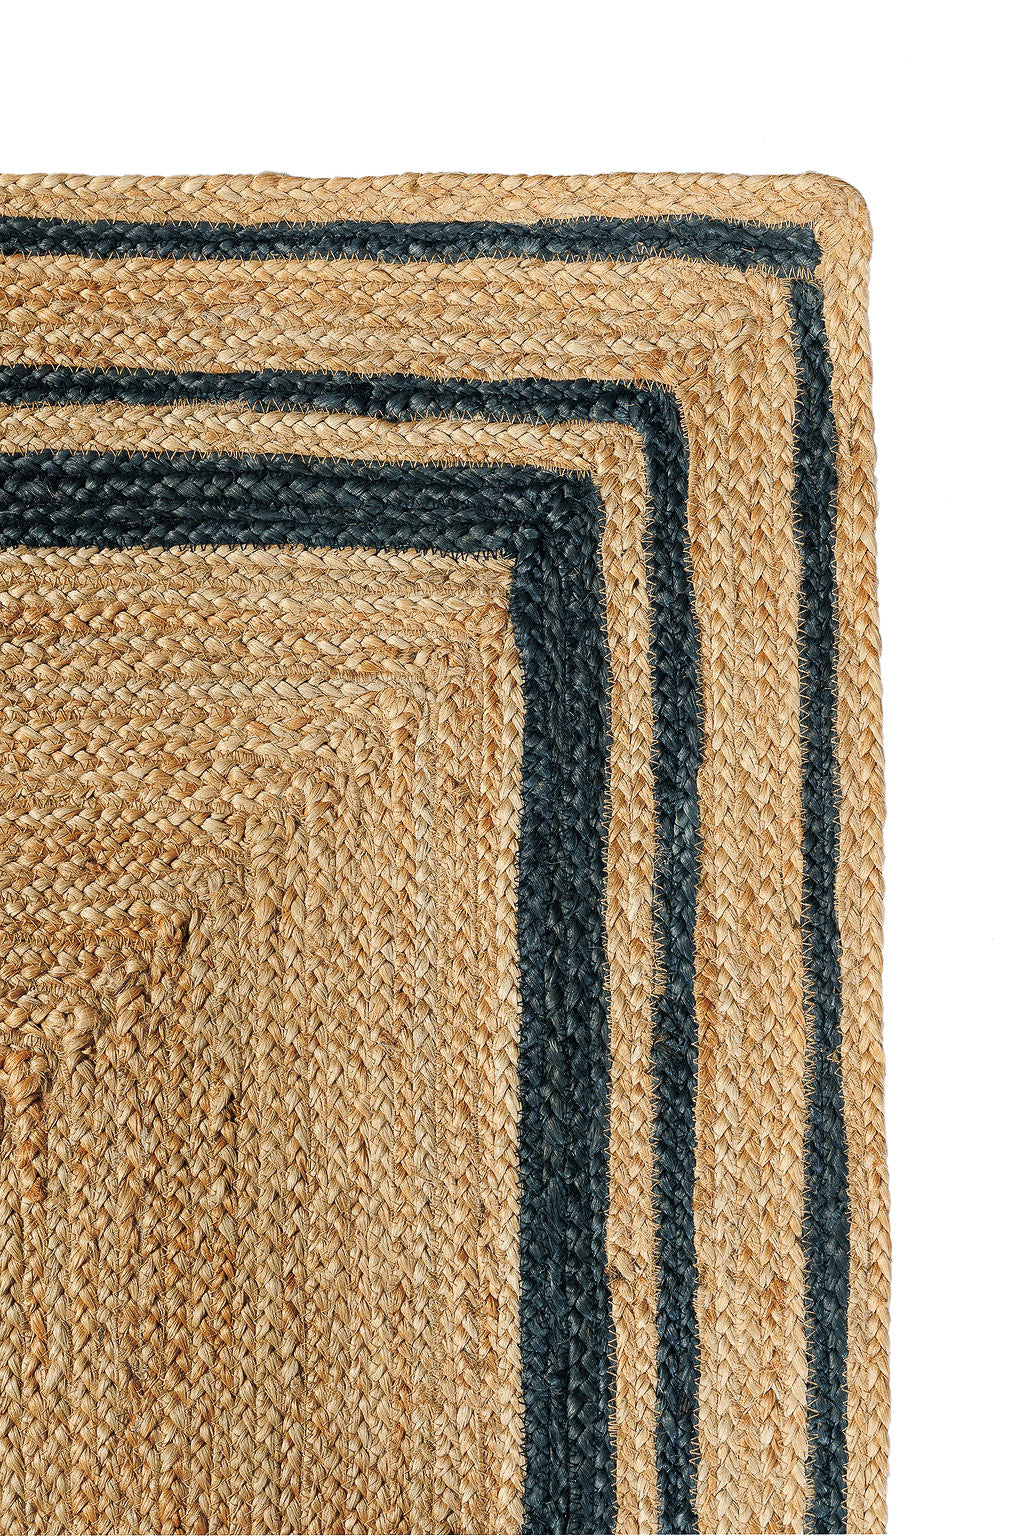 jute rug with black border